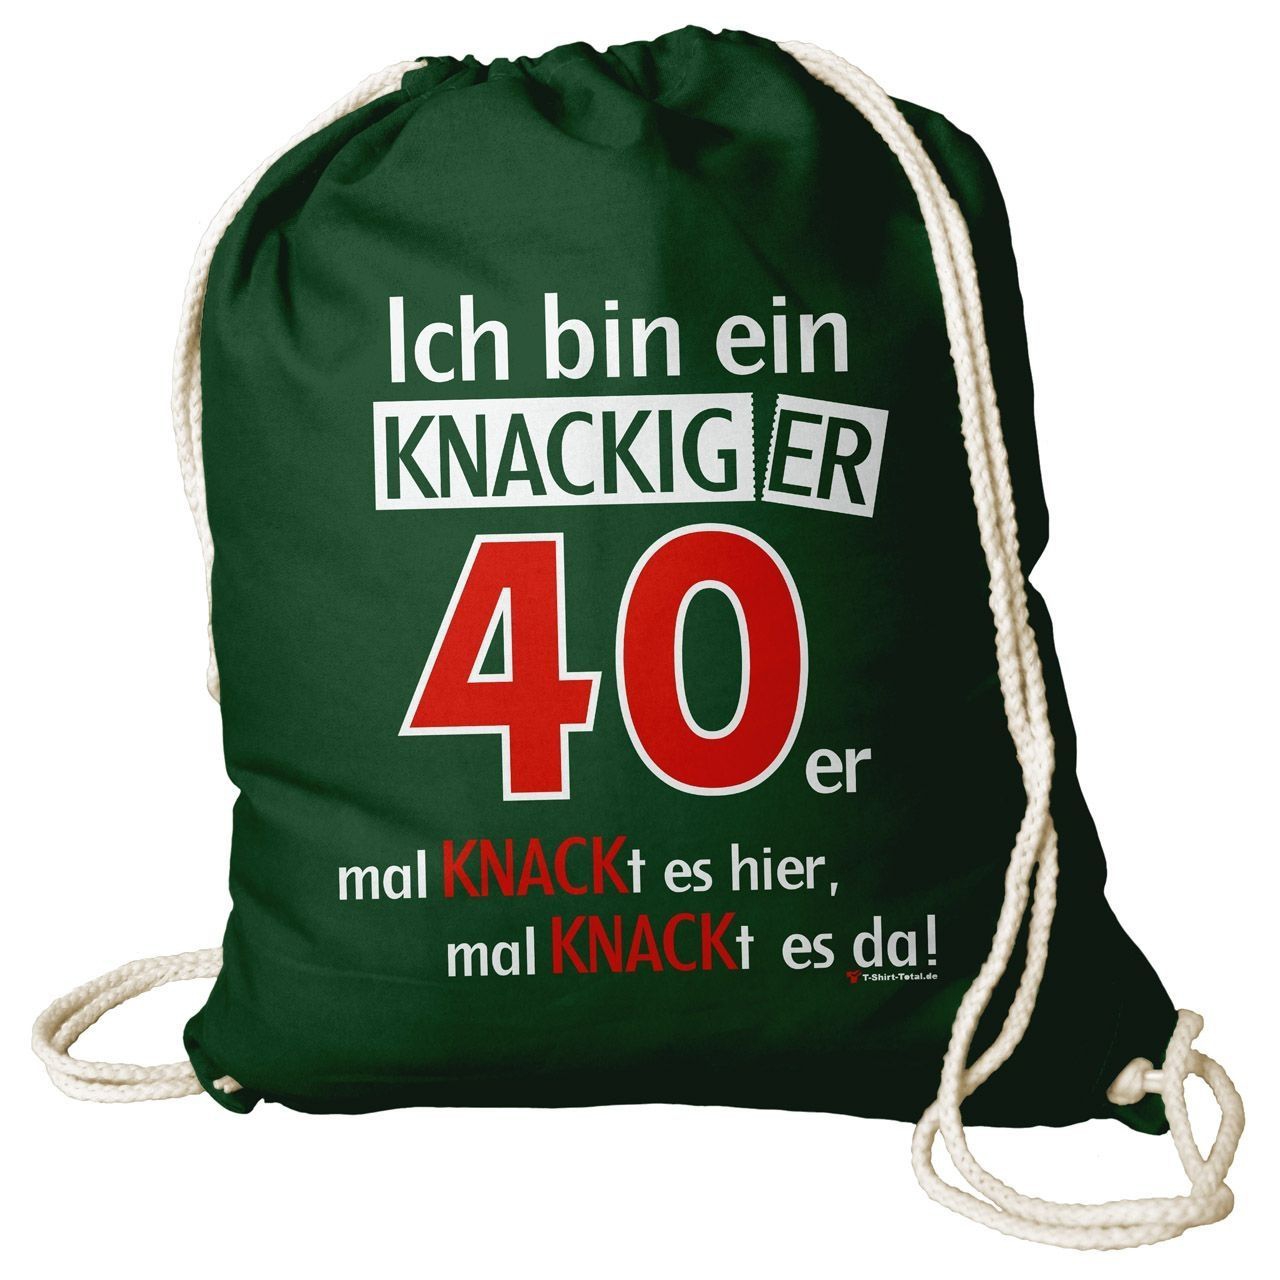 Knackiger 40er Rucksack Beutel dunkelgrün